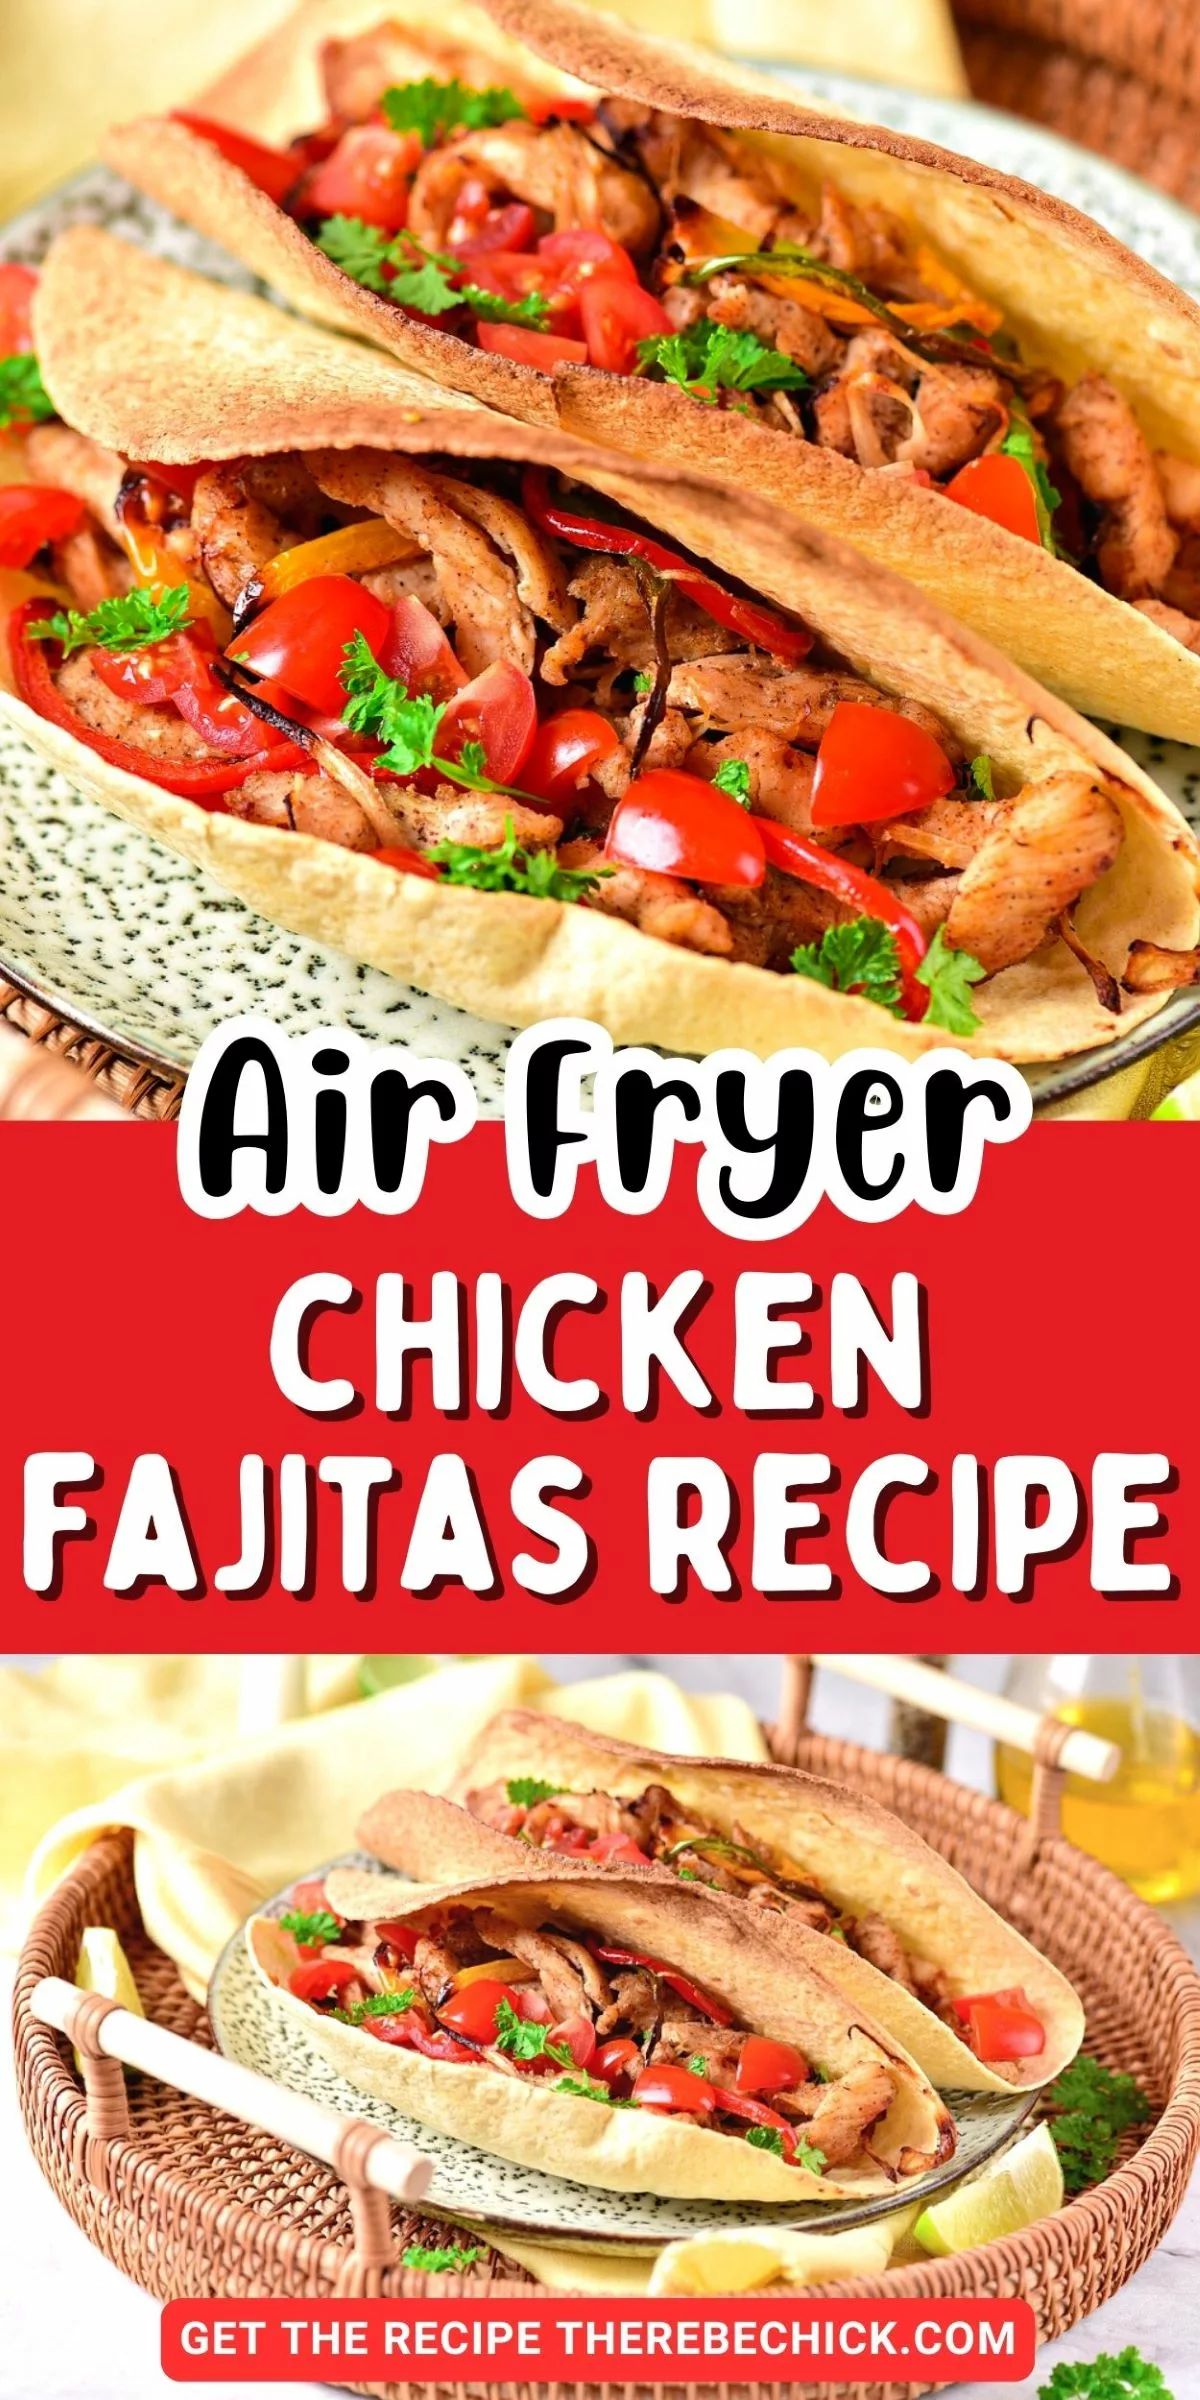 Quick and Easy Chicken Fajitas Air Fryer Recipe